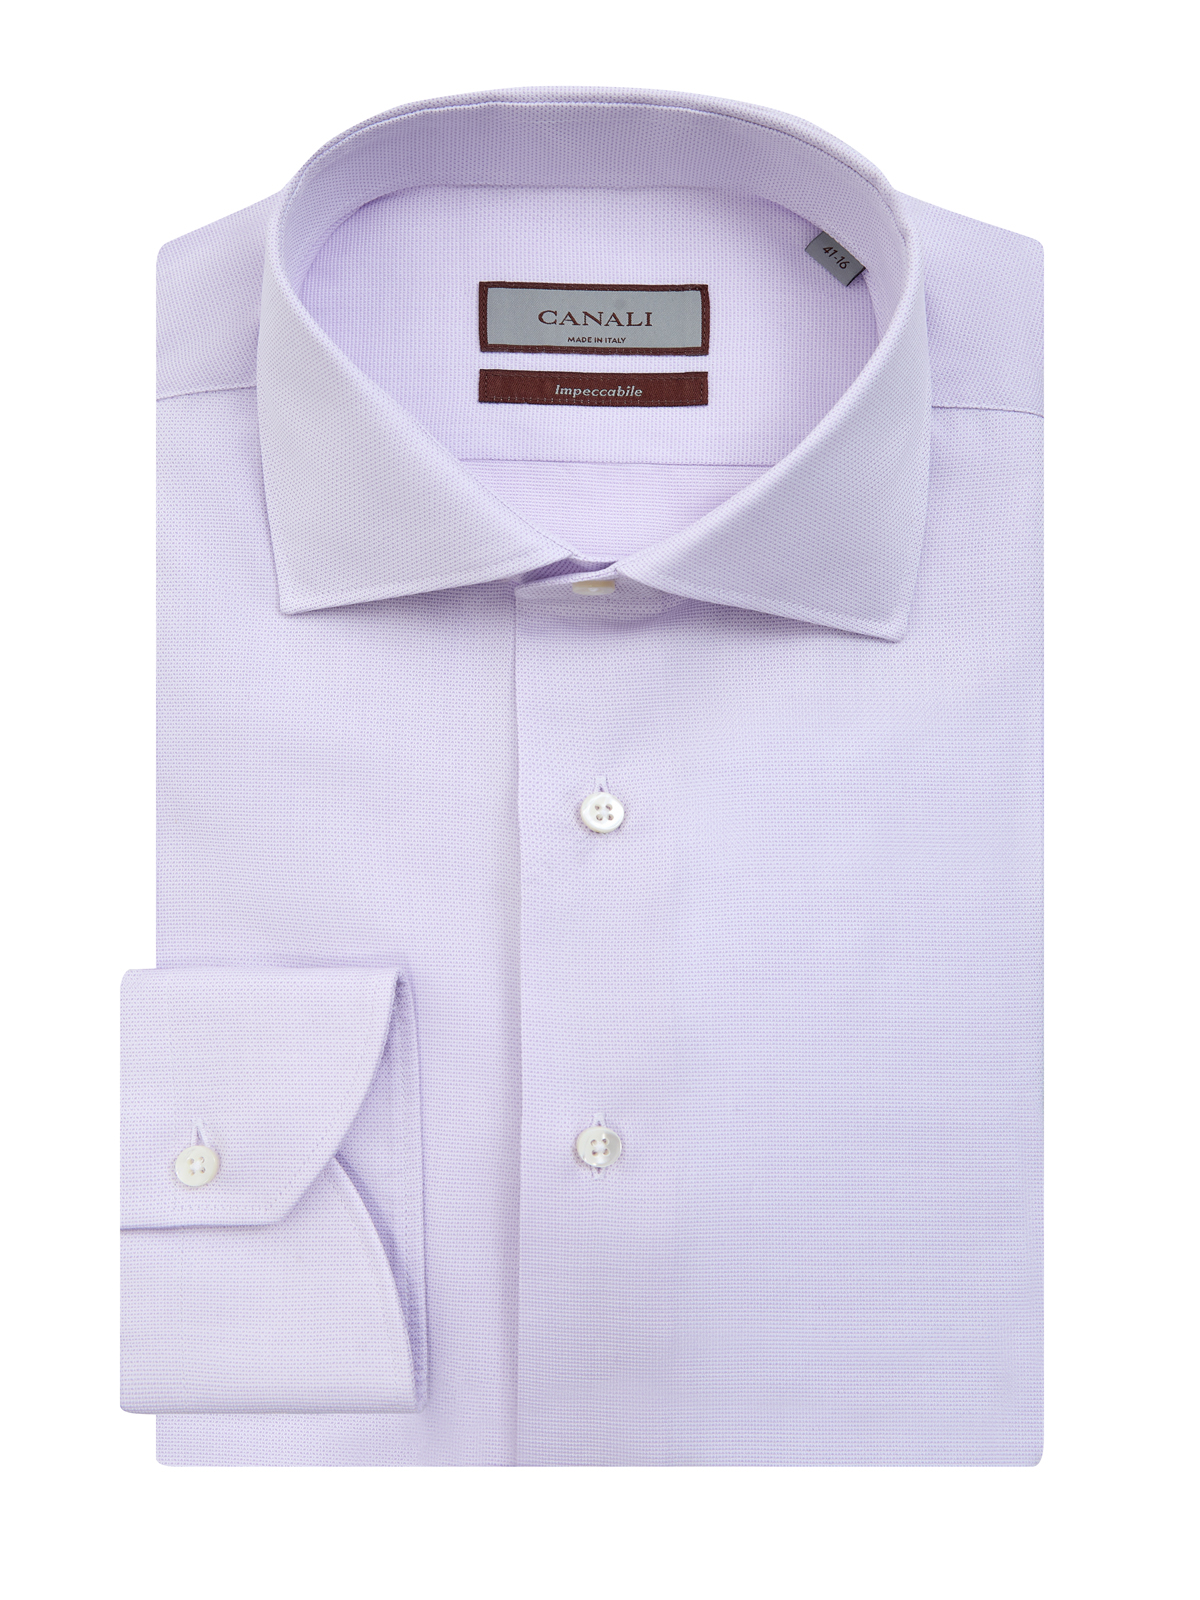 Рубашка из хлопкового пике с обработкой Impeccabile CANALI розового цвета